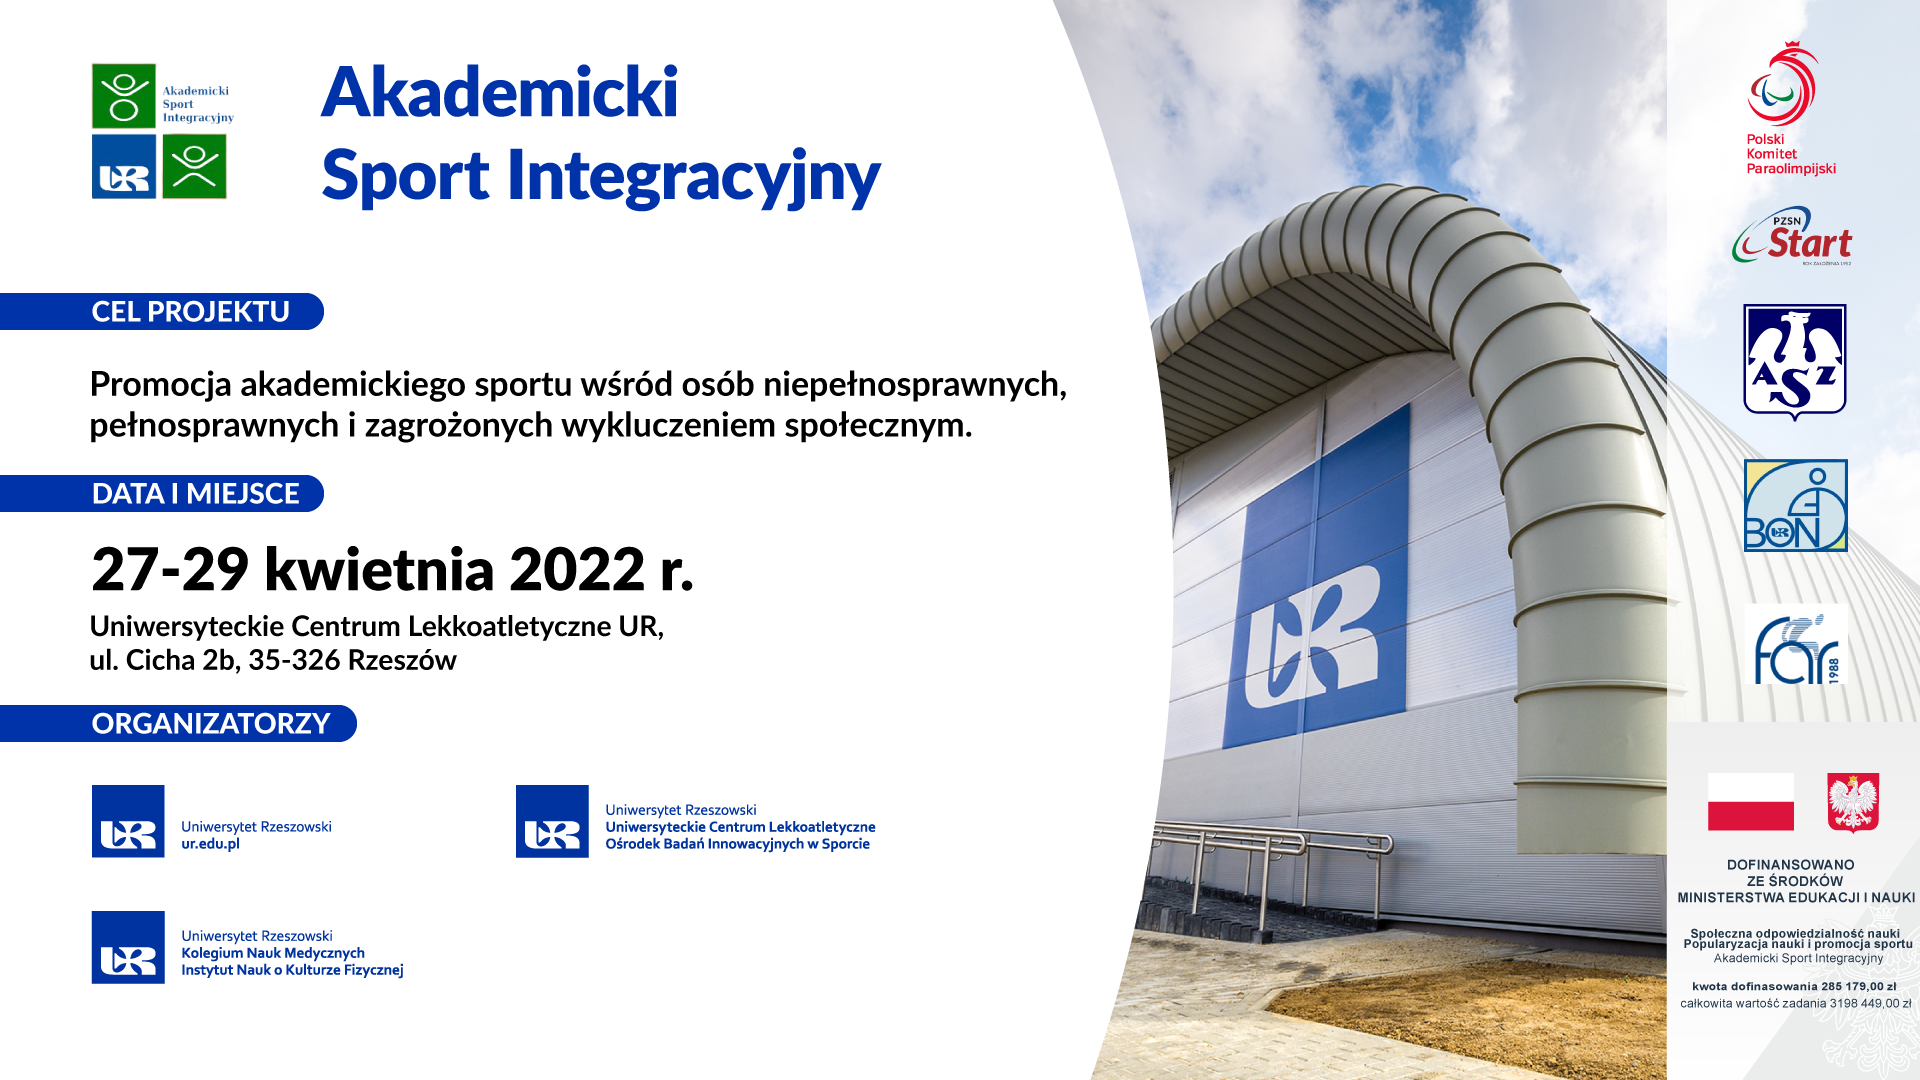 Plakat Akademicki Sport Integracyjny.png [1.13 MB]